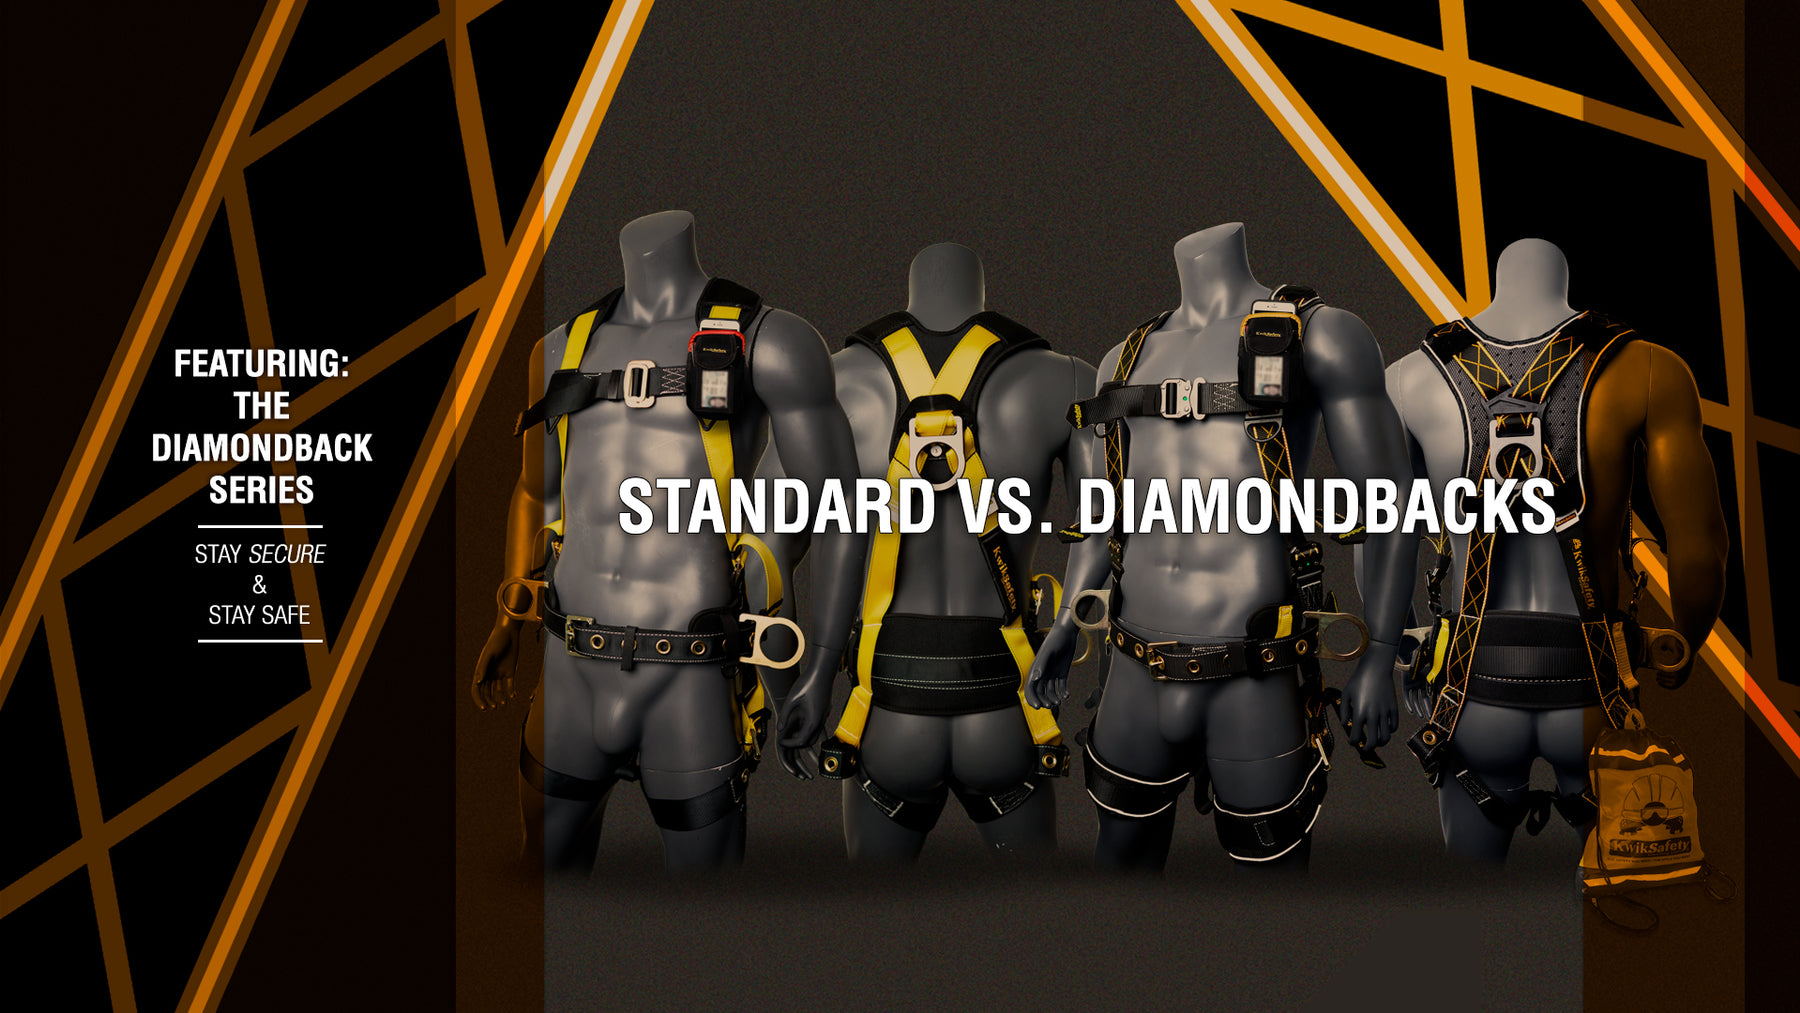 Introducing Our Newest Line: The DIAMONDBACKS